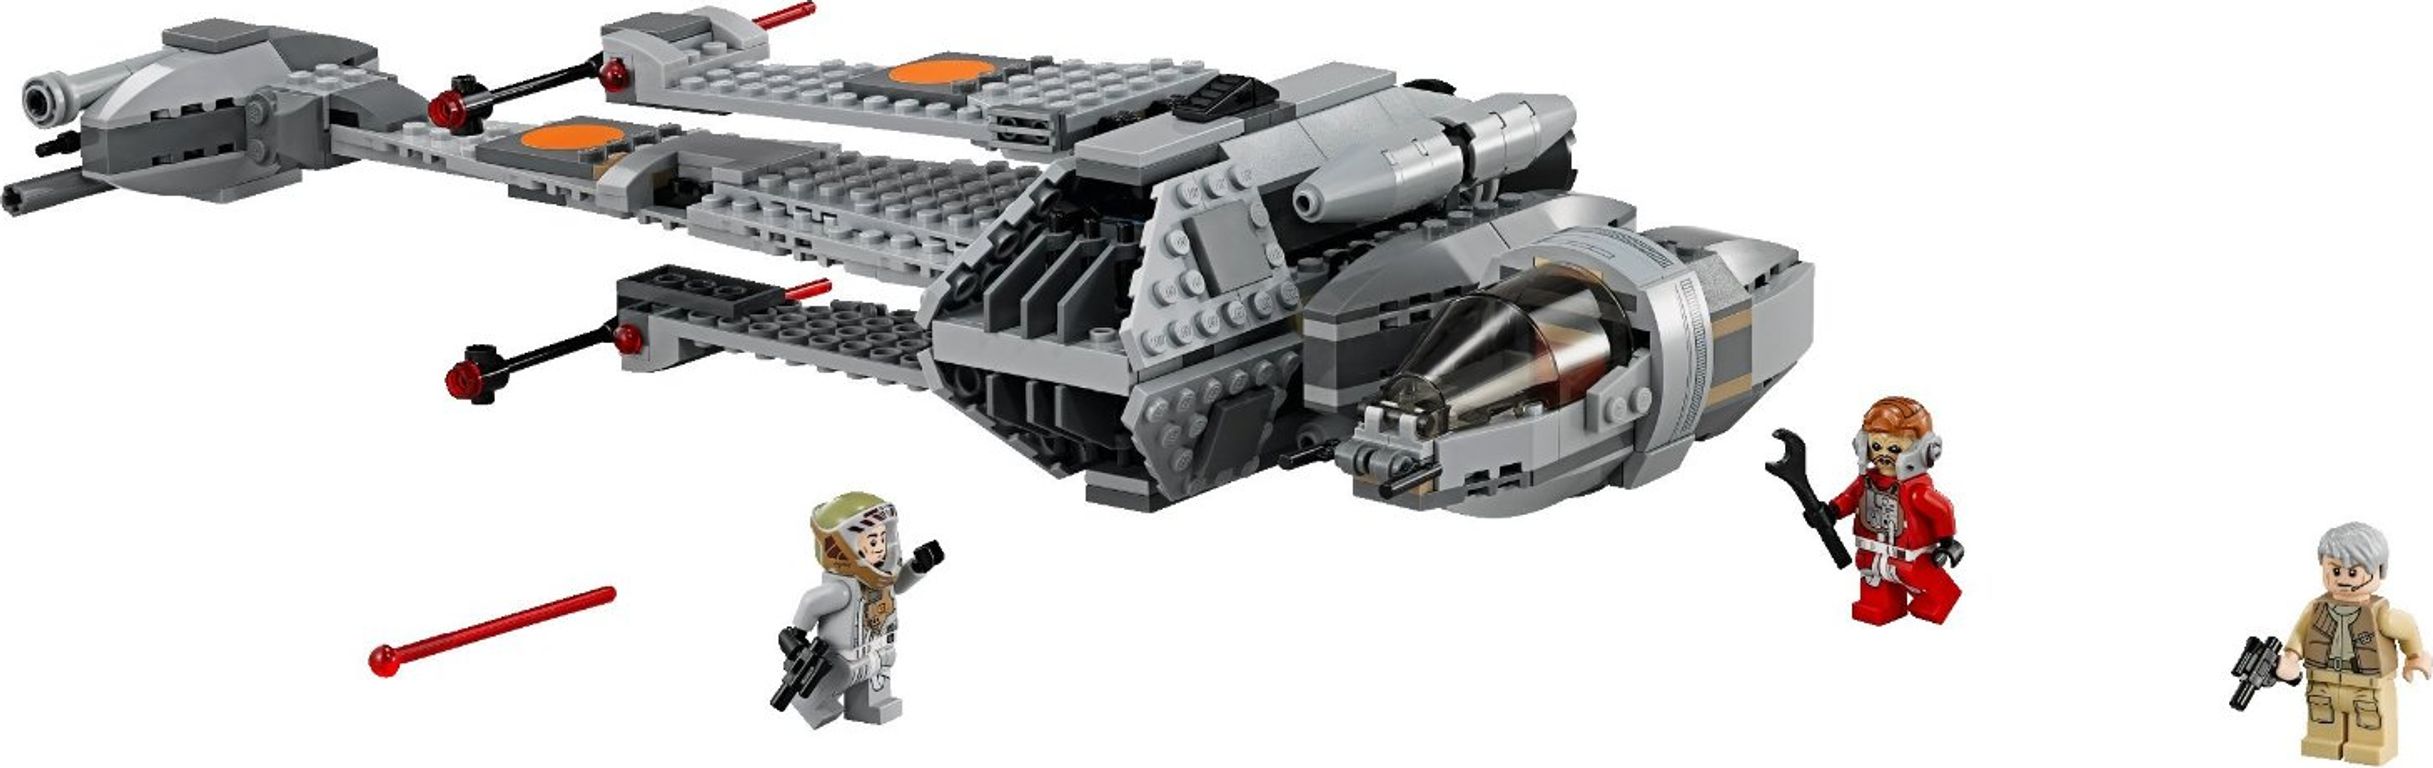 LEGO® Star Wars B-Wing partes